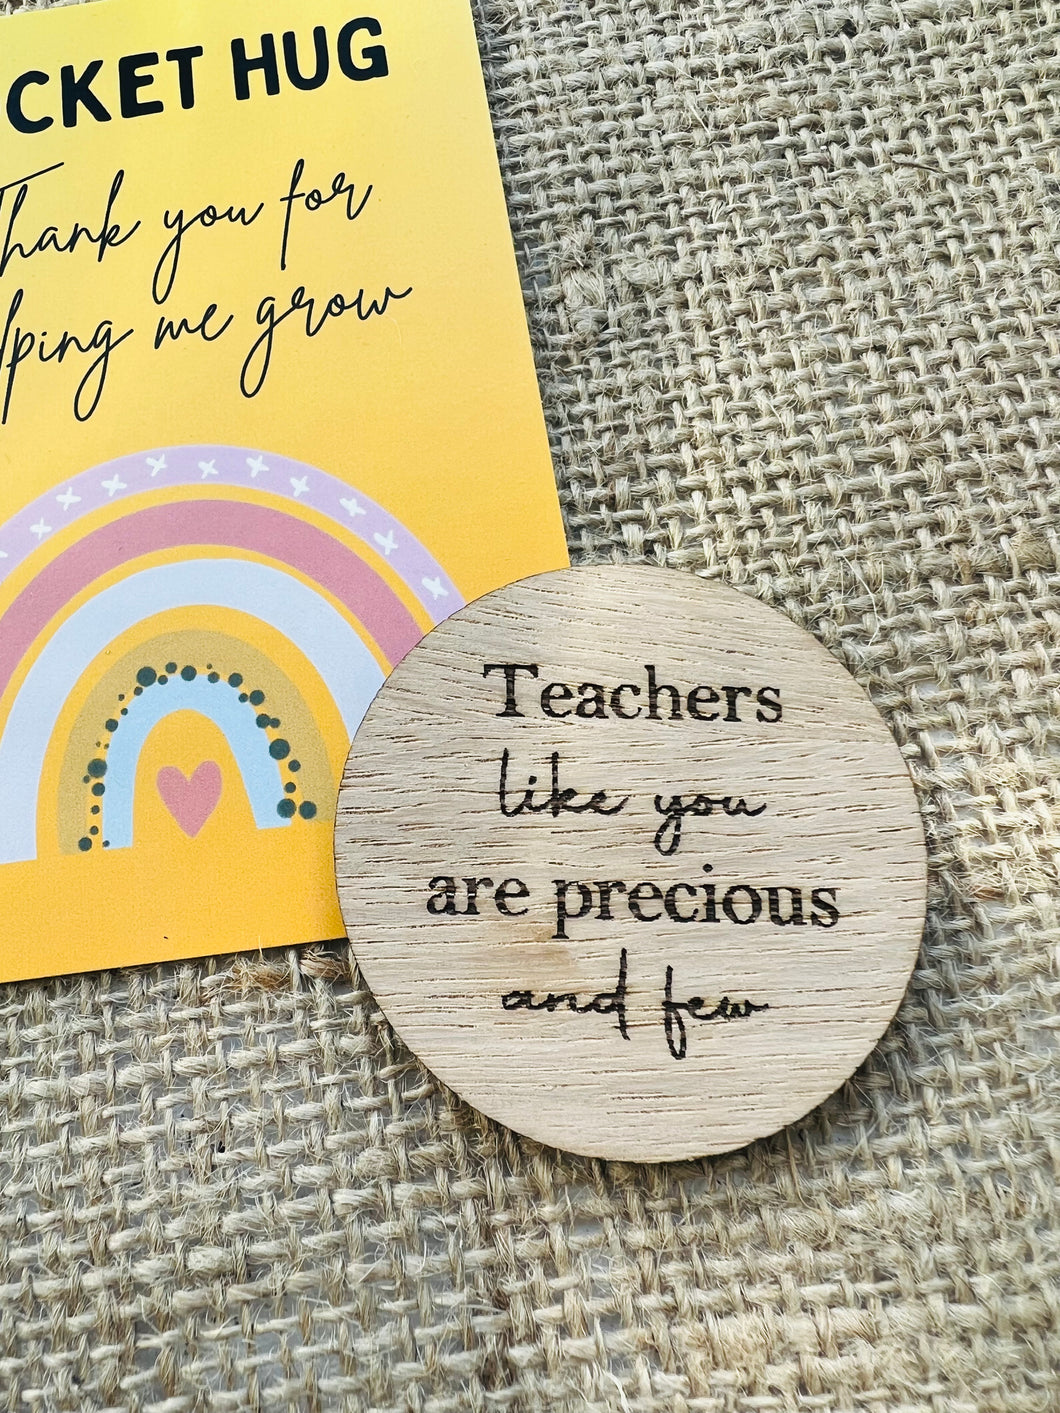 TEACHER POCKET HUG - Personalised - End of Term Gift - Teacher Appreciation Gift - Wooden Pocket Hug - Teacher Gift